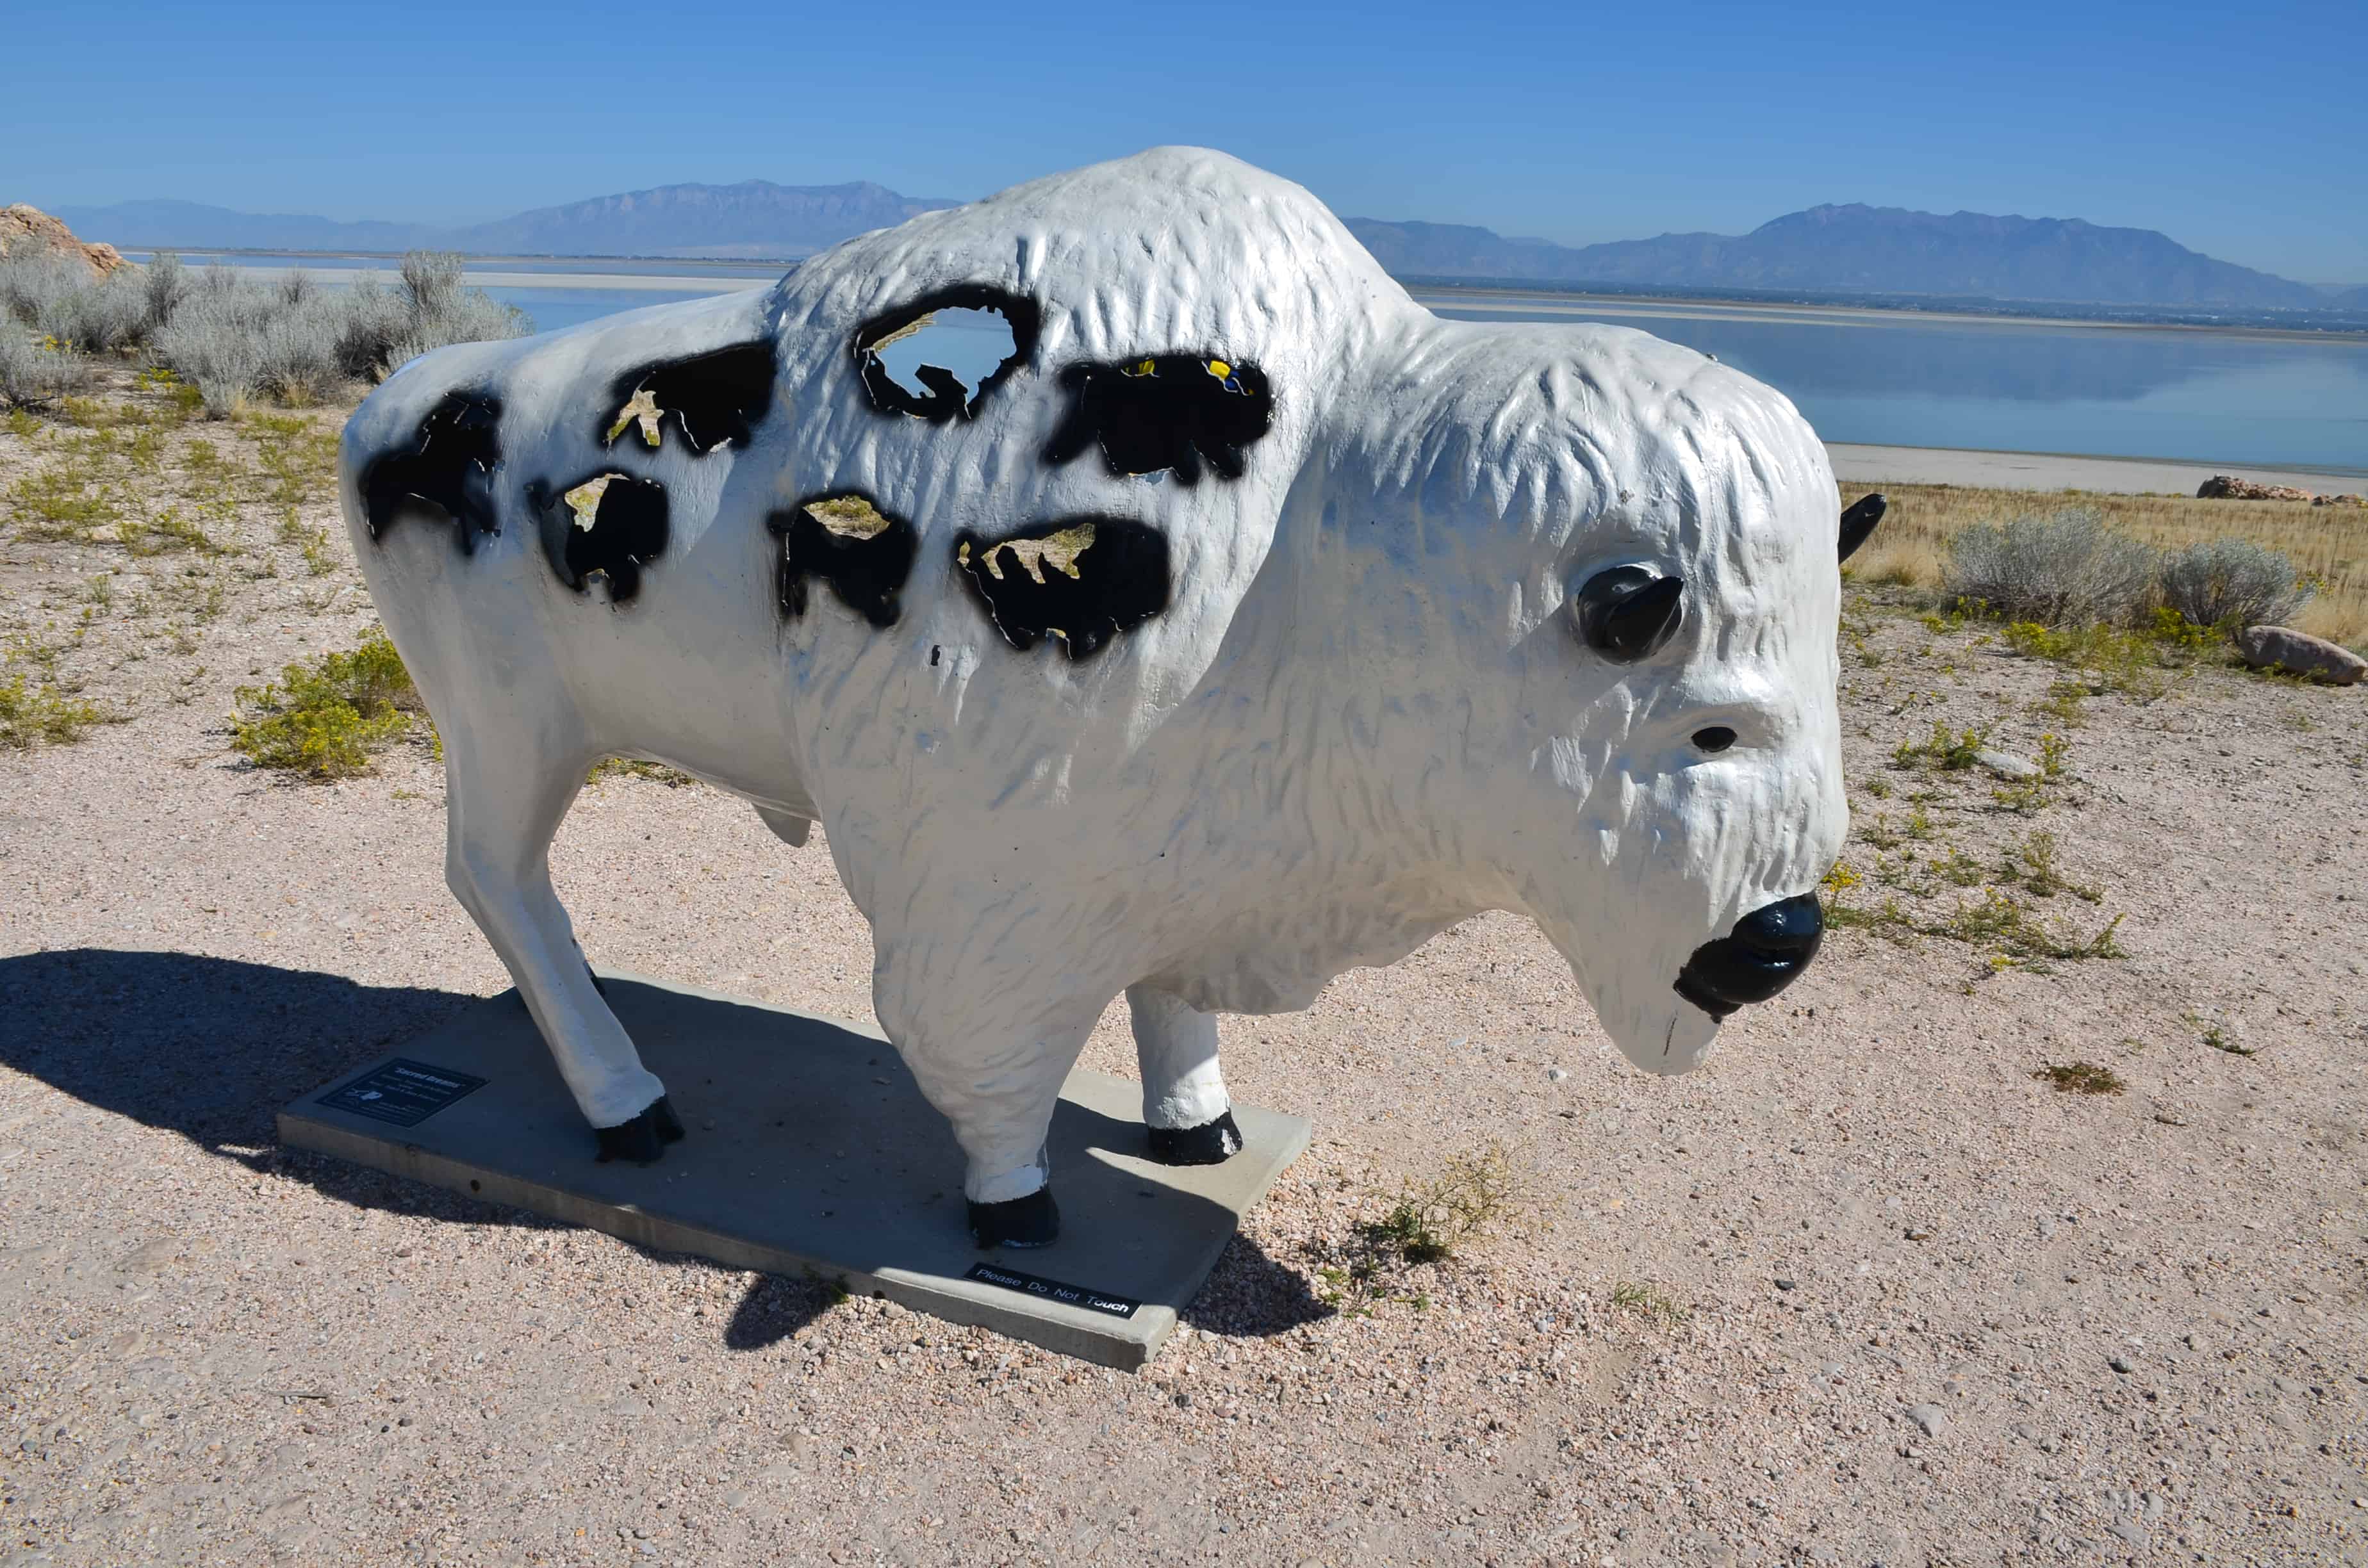 Bison sculpture at Antelope Island State Park in Utah